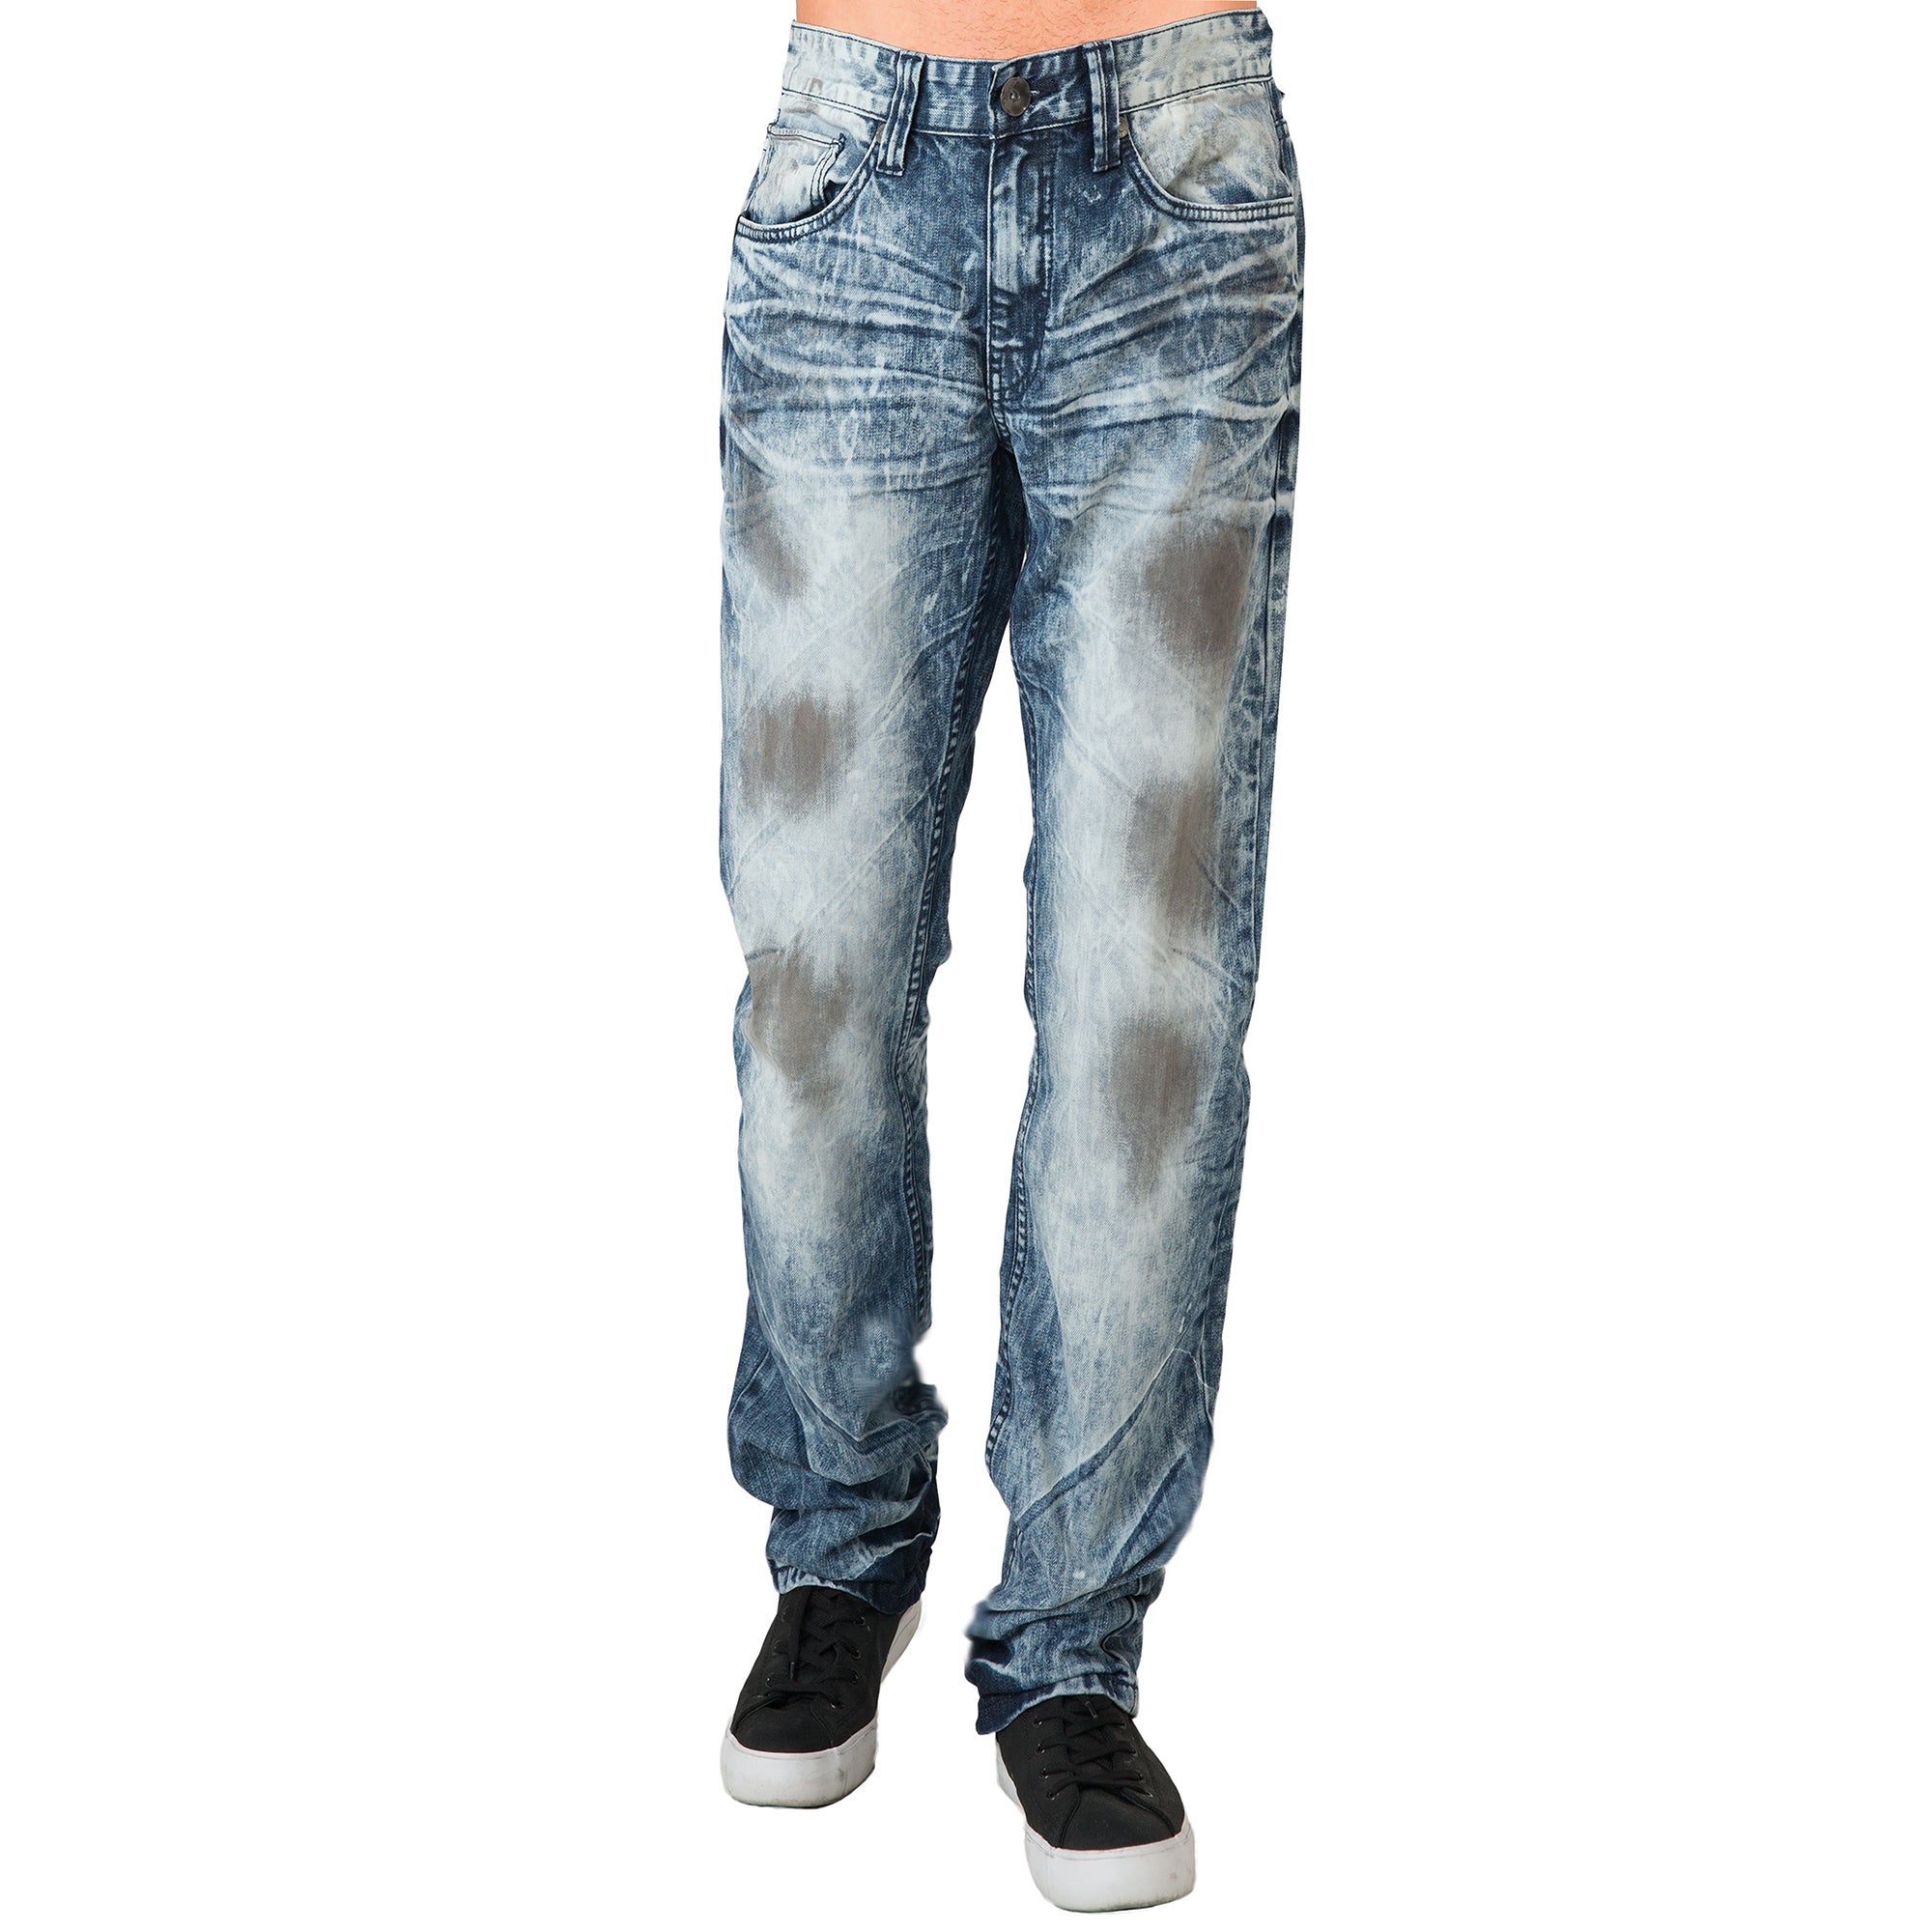 Men's light denim jeans with teddy bear embroidery - MOSCHINO - Pavidas